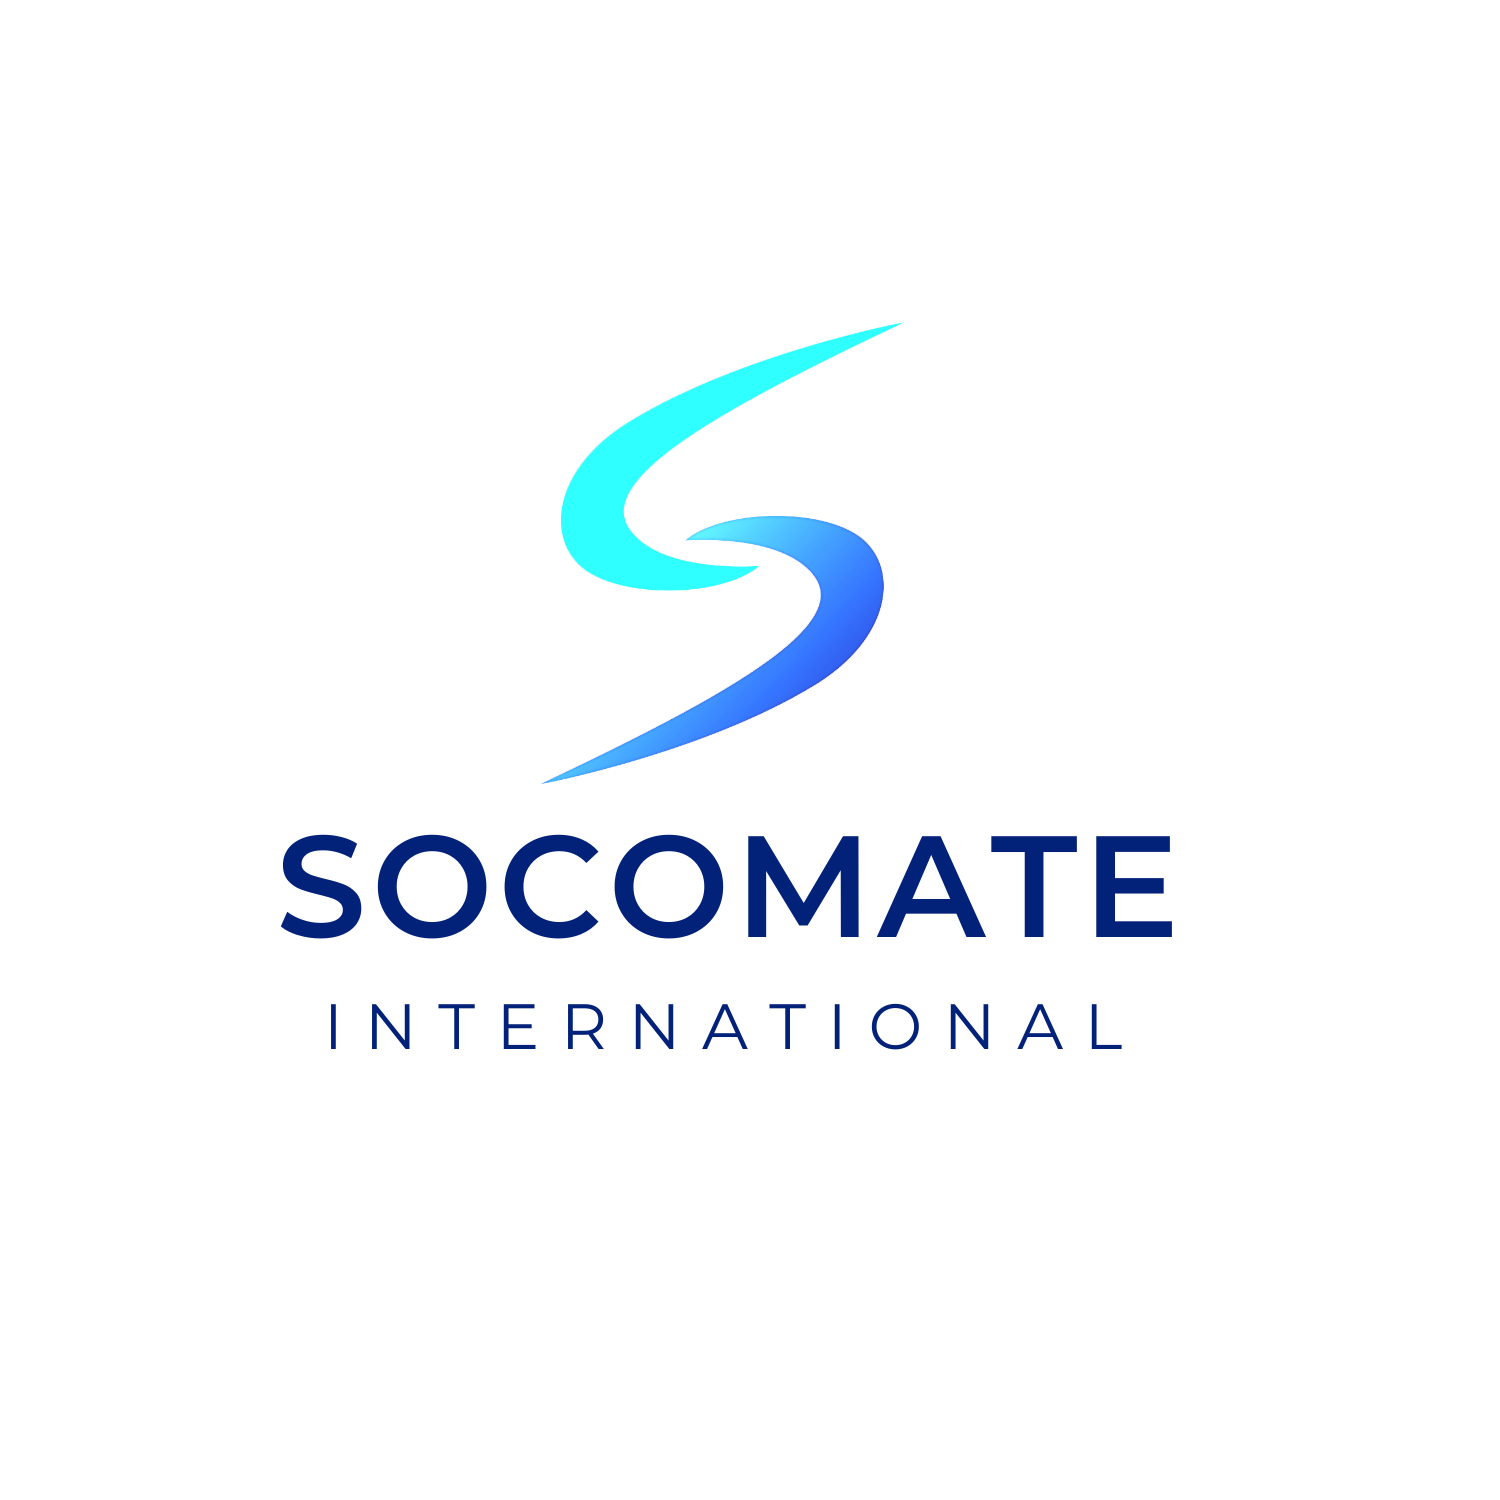 vectorisation logo socomate (1)